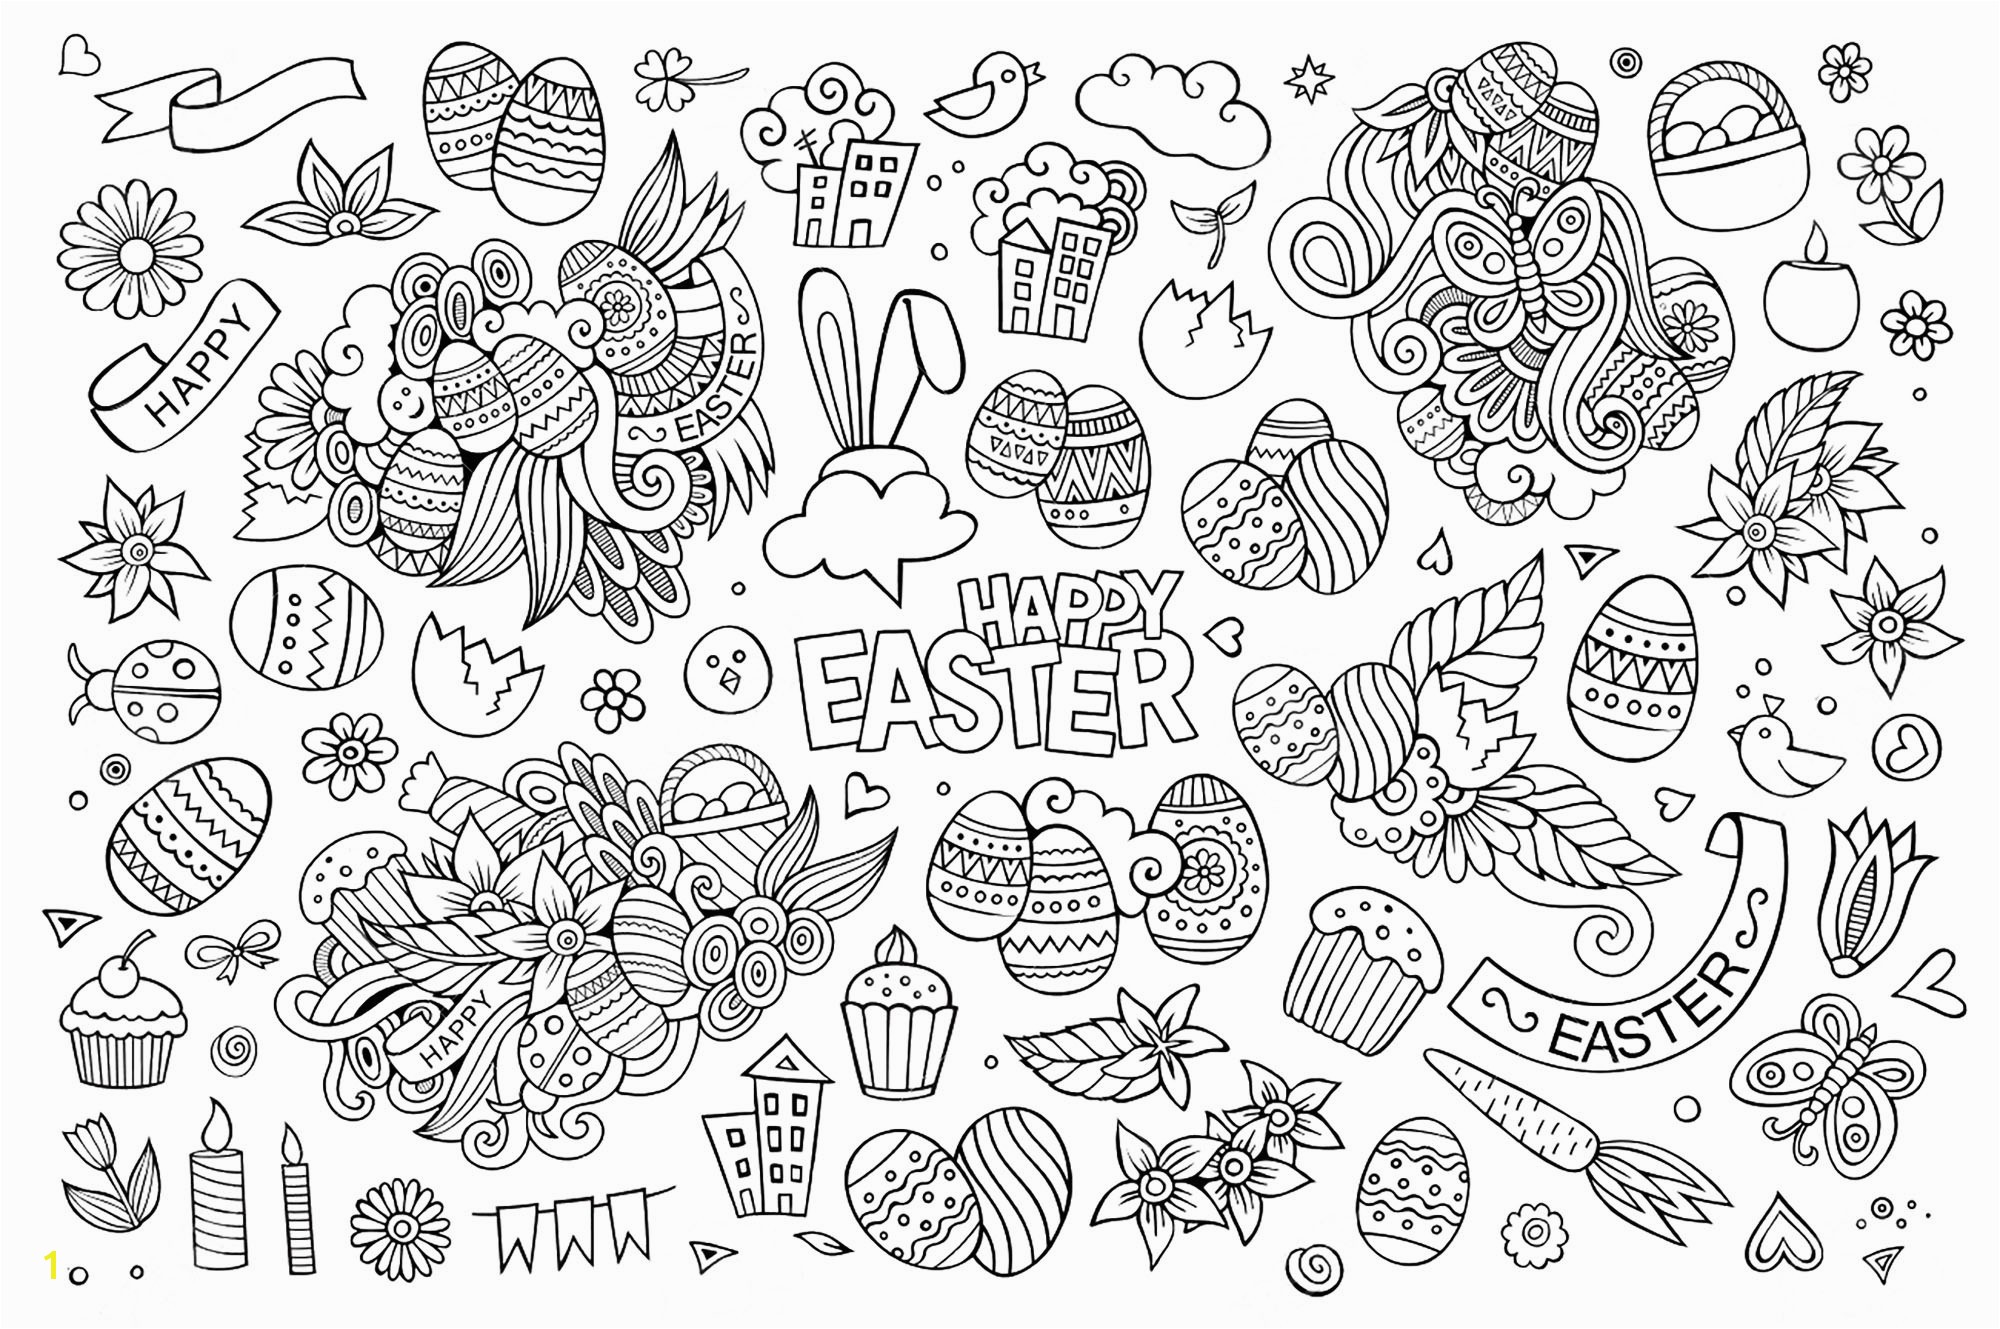 Egg Hunt Coloring Pages Unique Easter Coloring Pages for Adults Best Coloring Pages for Kids